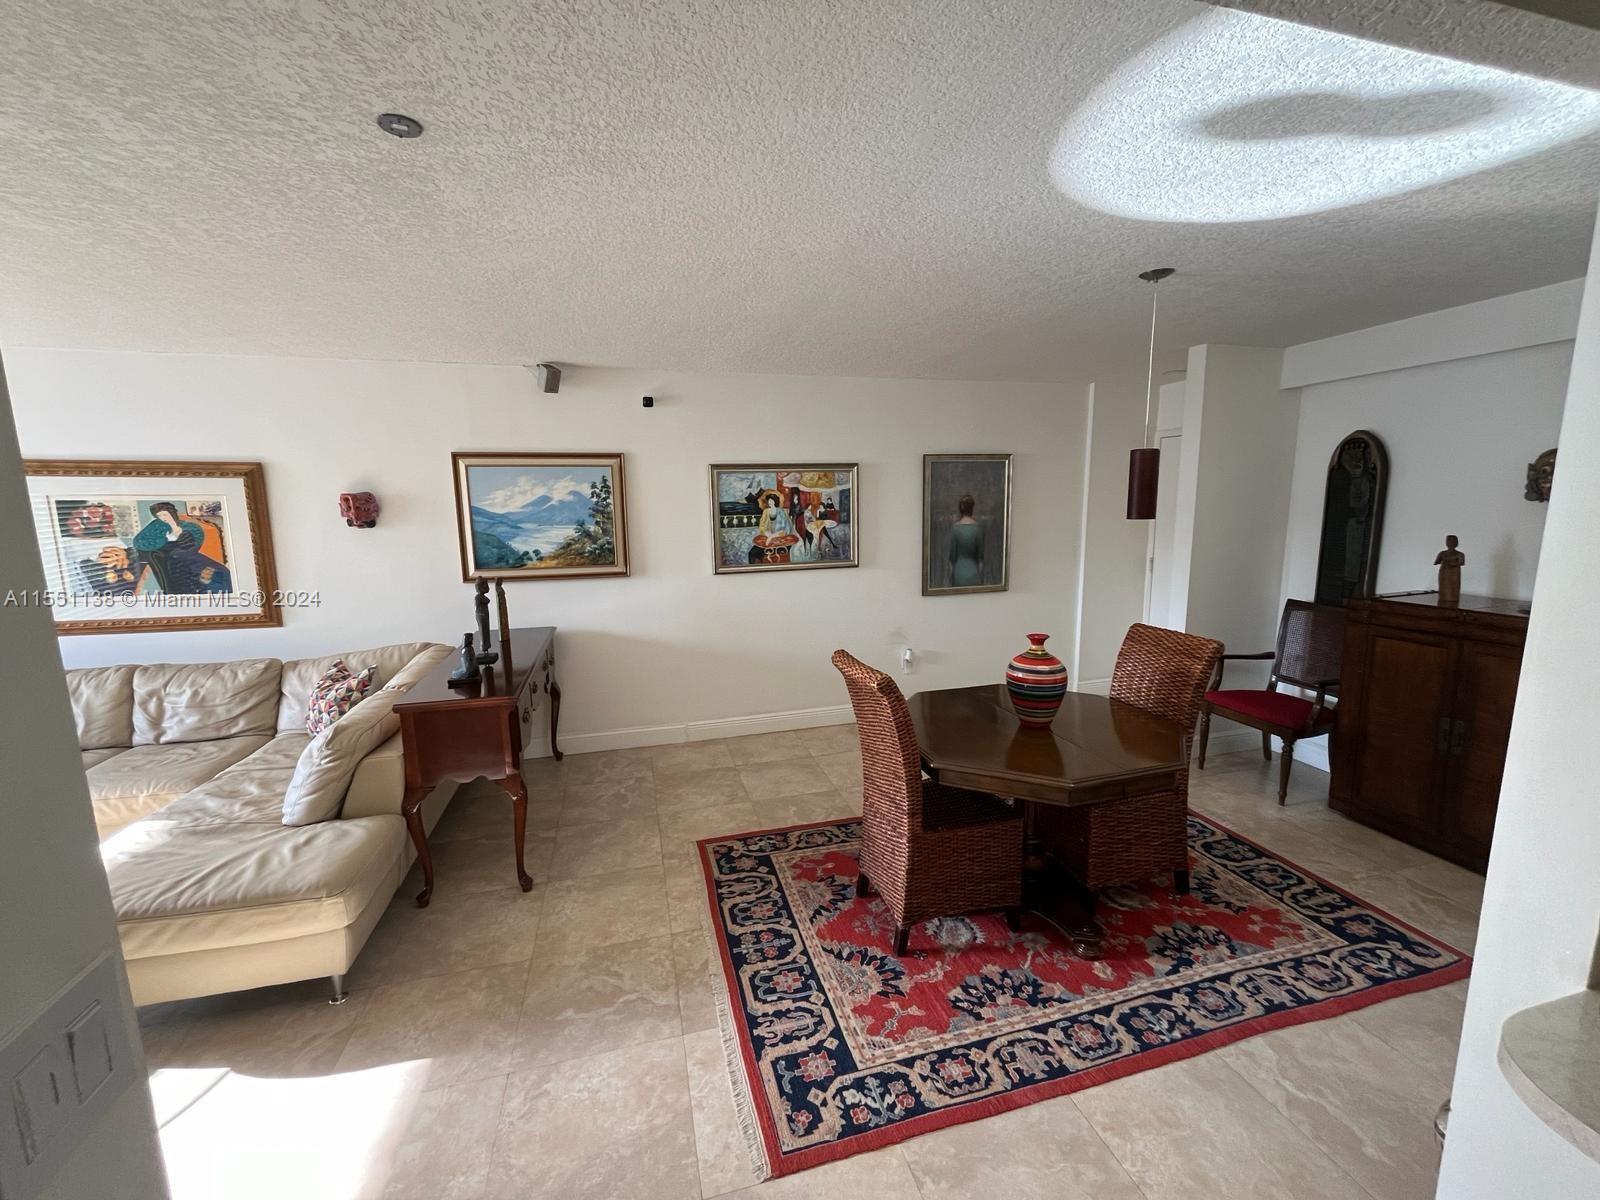 Property for Sale at 1775 Washington Ave 7C, Miami Beach, Miami-Dade County, Florida - Bedrooms: 2 
Bathrooms: 2  - $669,000